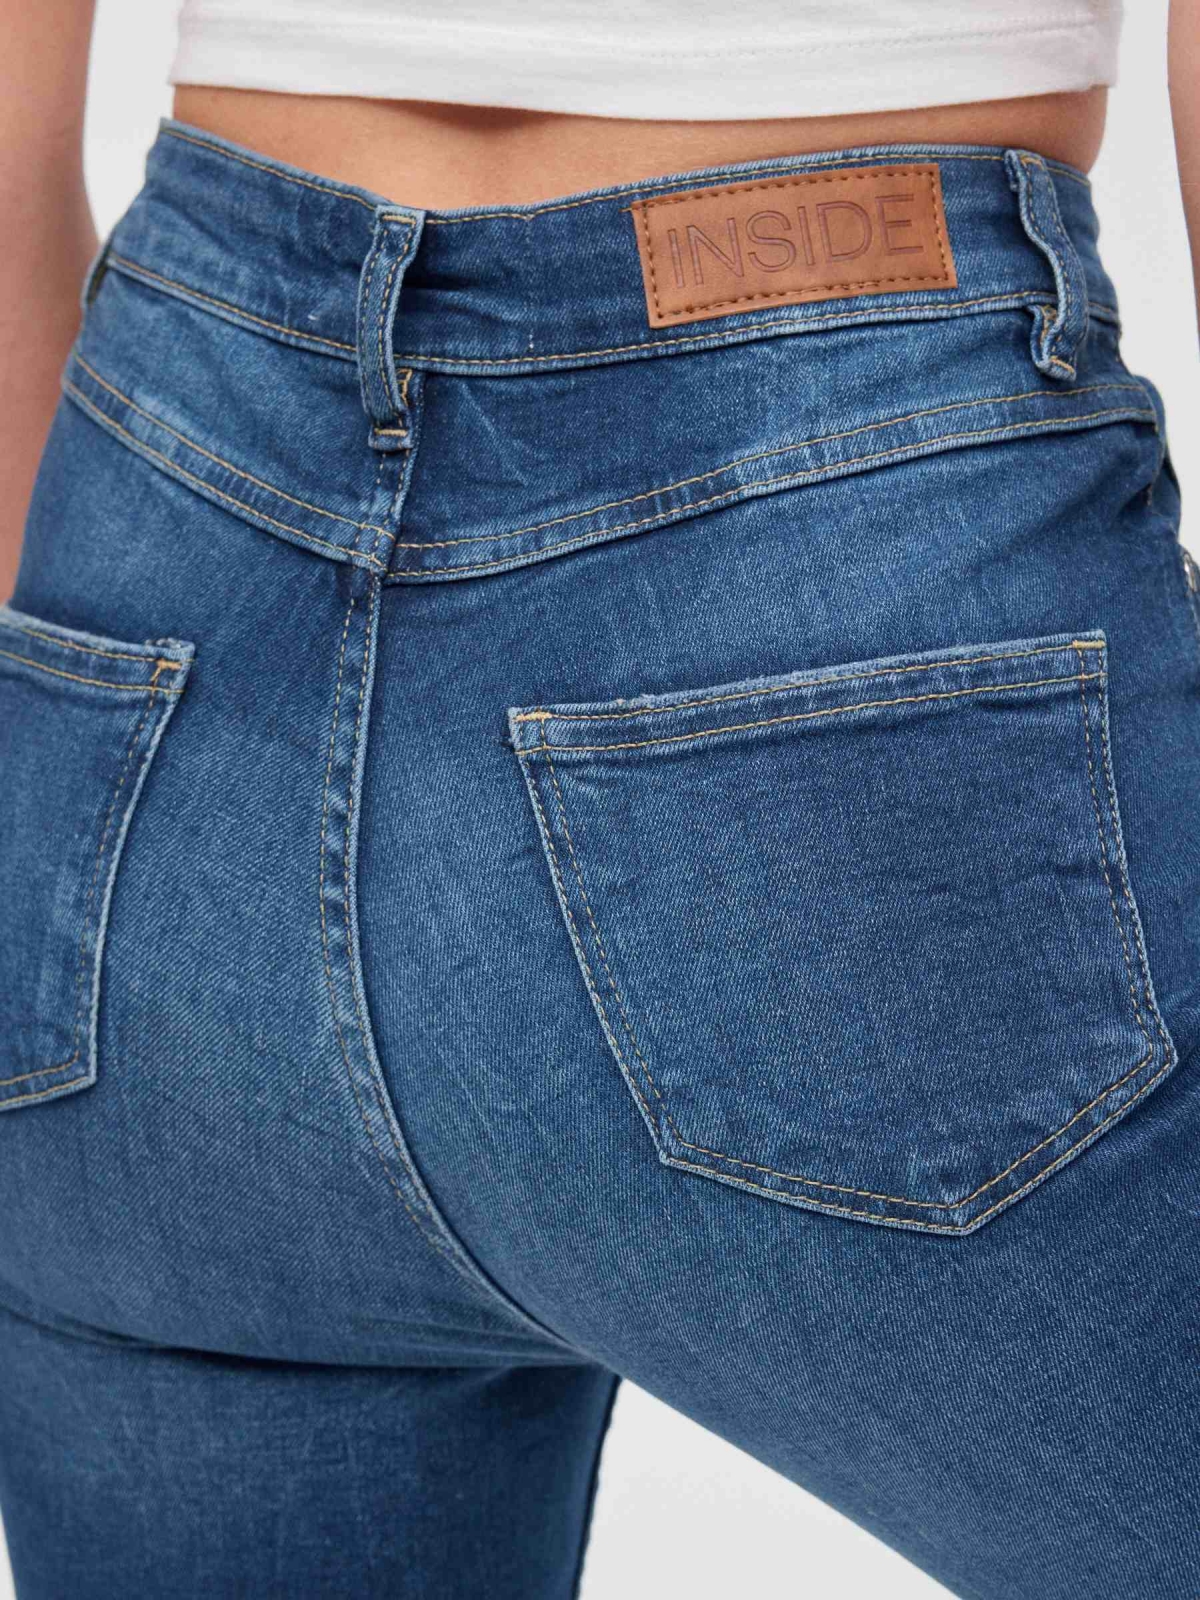 Jeans skinny tiro medio desgastados azul oscuro vista detalle